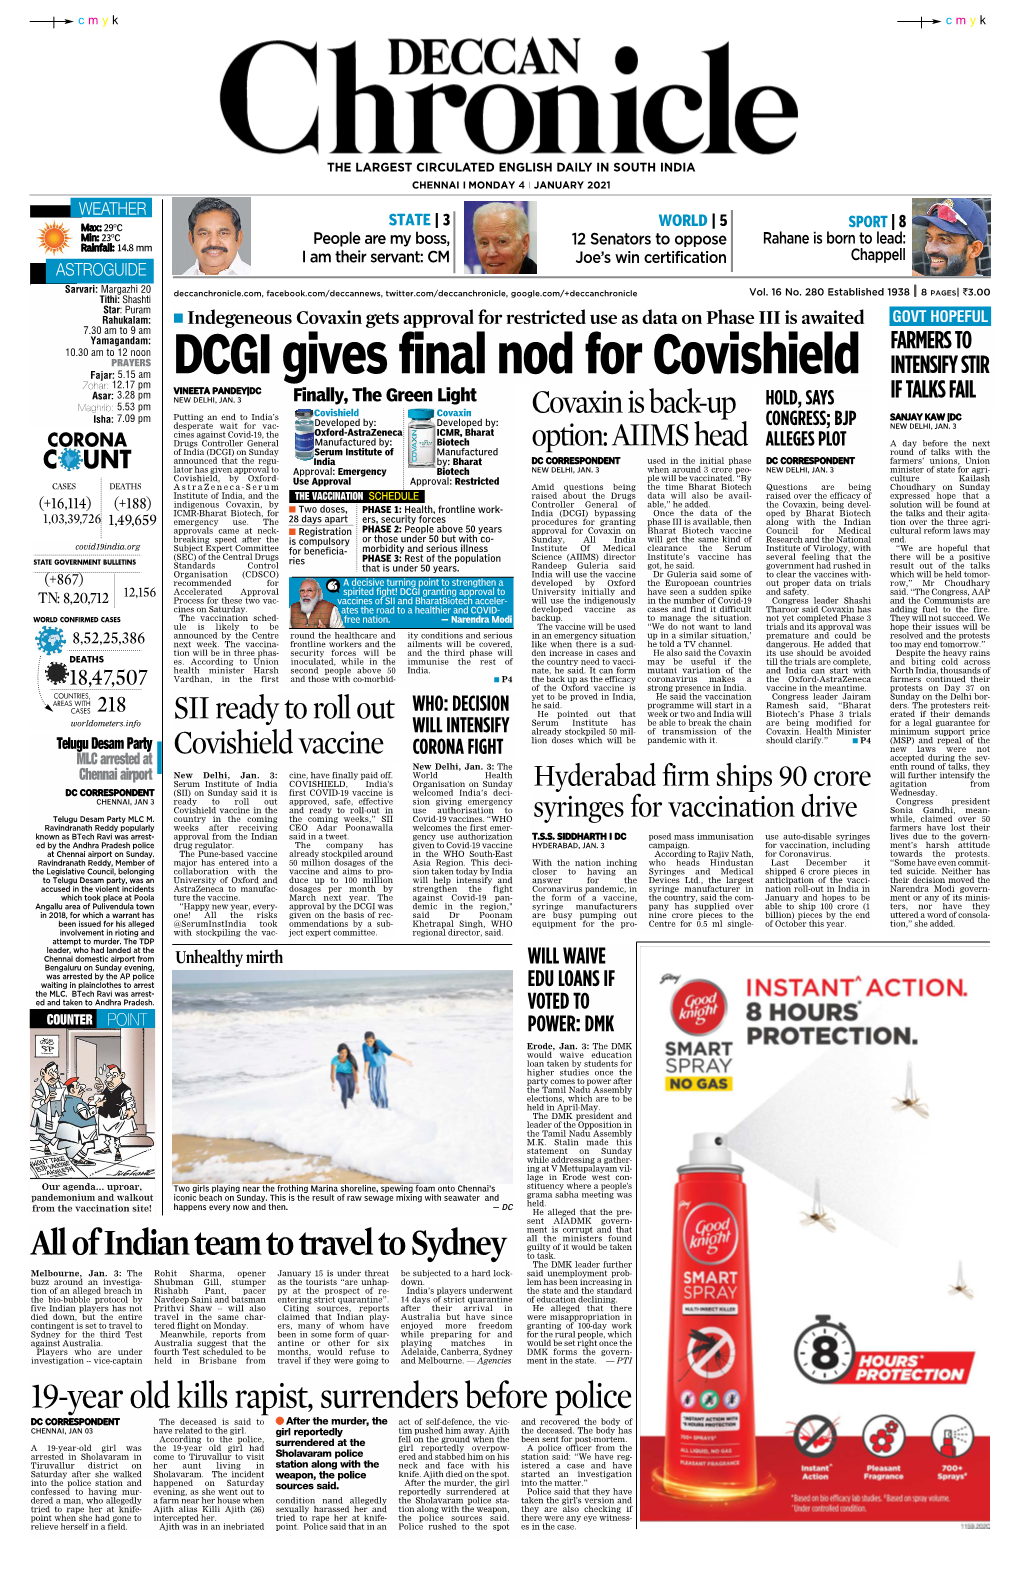 DCGI Gives Final Nod for Covishield INTENSIFY STIR Zohar: 12.17 Pm 3.28 Pm VINEETA PANDEY|DC Asar: NEW DELHI, JAN